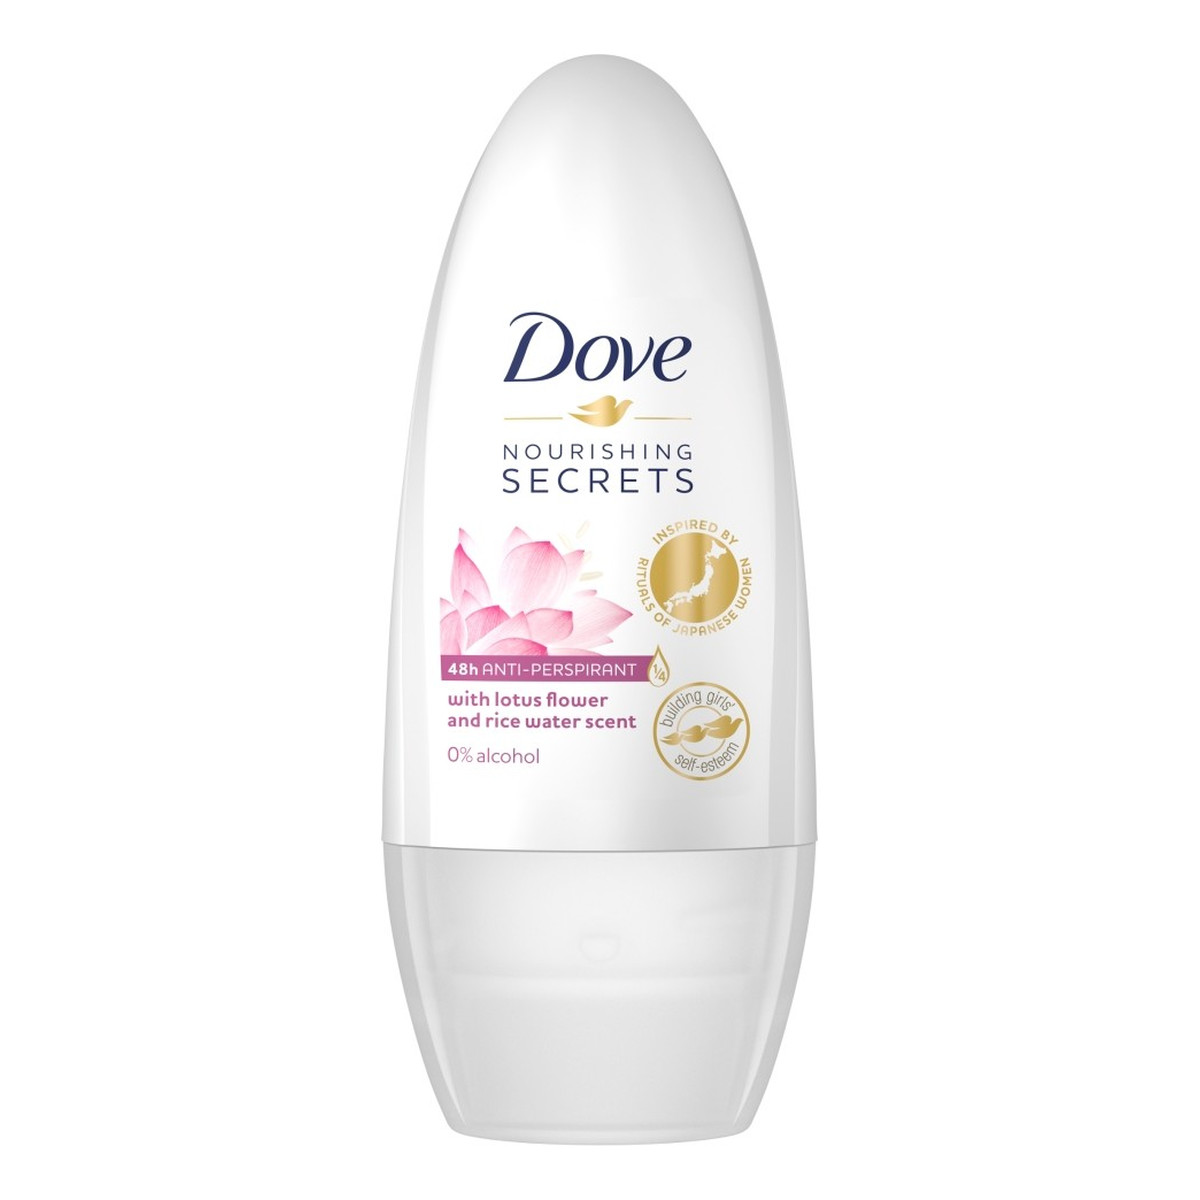 Dove Nourishing Secrets Dezodorant roll-on 48H Glowing Ritual 50ml